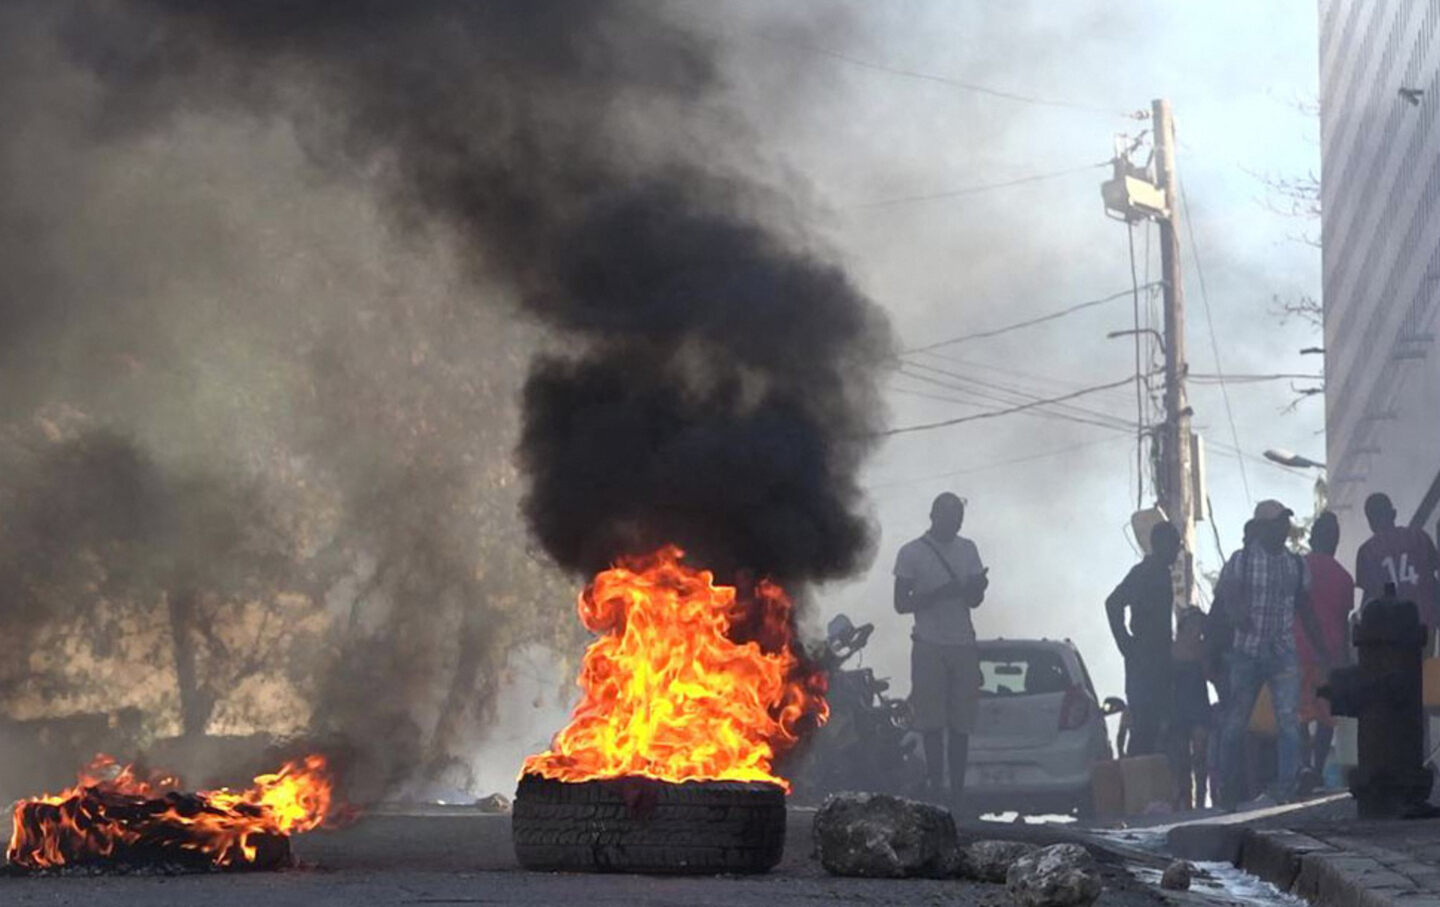 A Haiti Gang Offensive, the Sudan Crisis, and Gaza